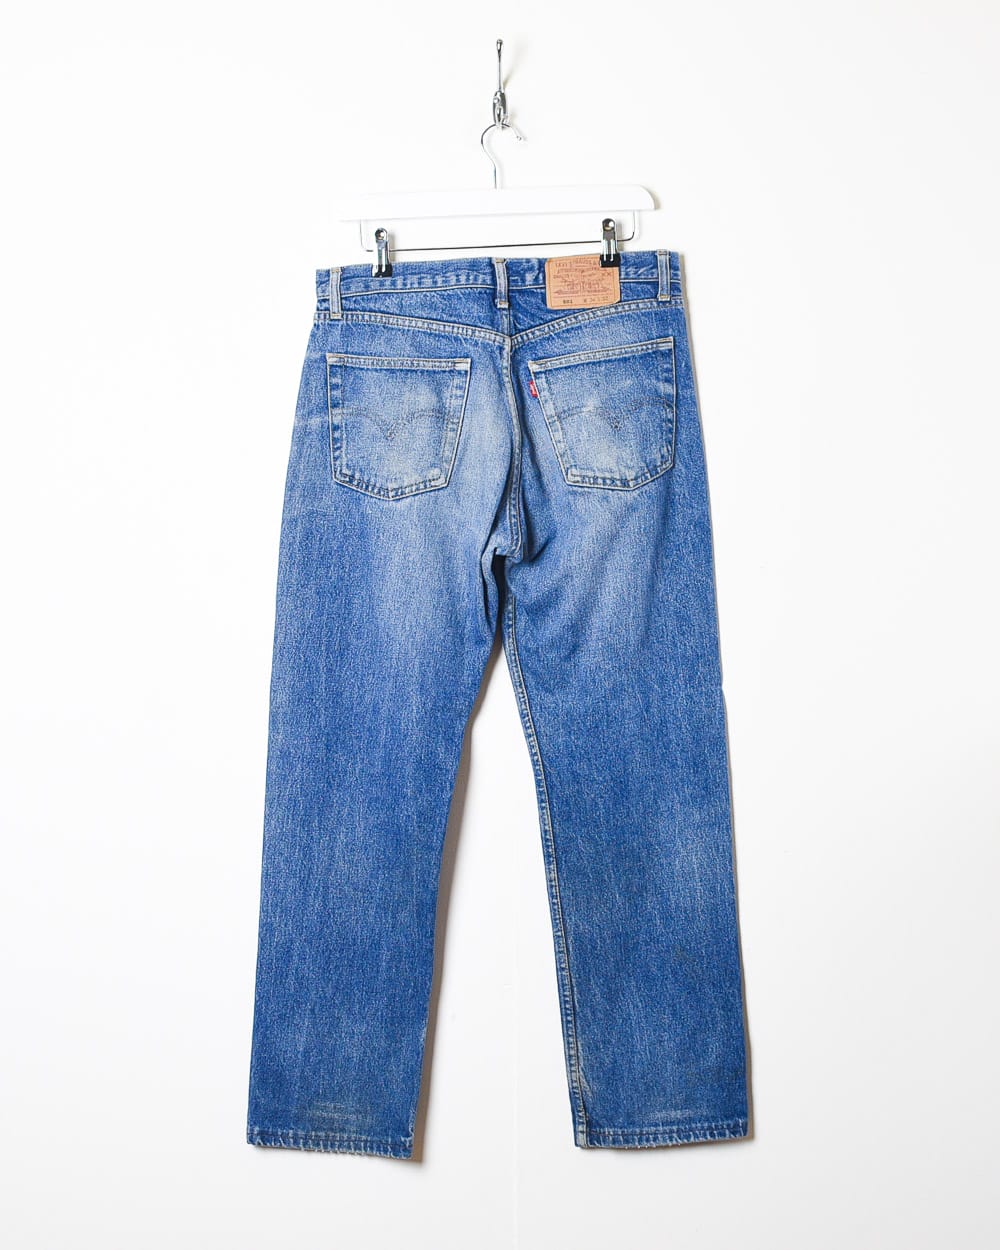 Blue Levi's USA 501 Jeans - W32 L29